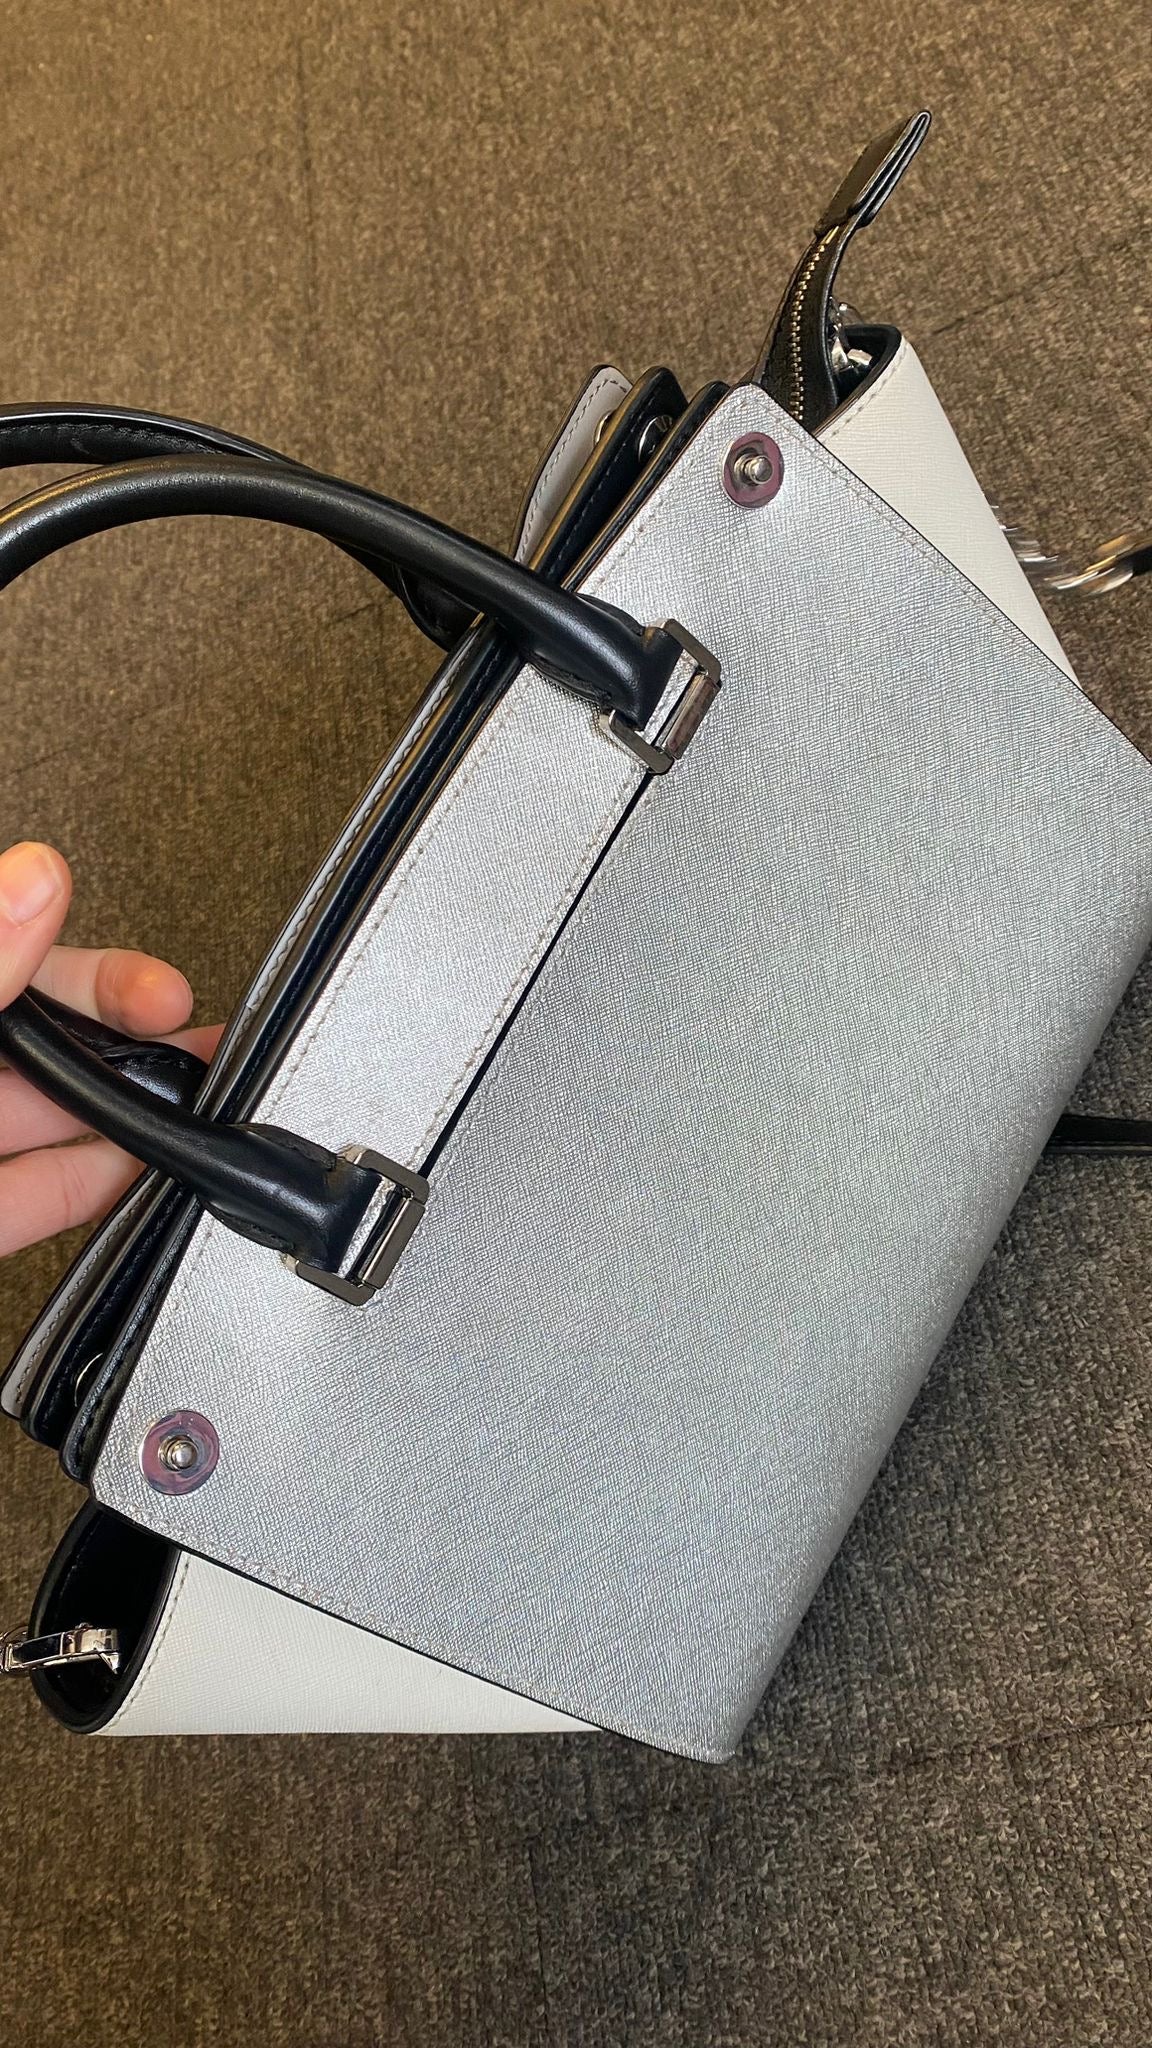 Michael Kors Selma Leather Handbag with Detachable Jacket